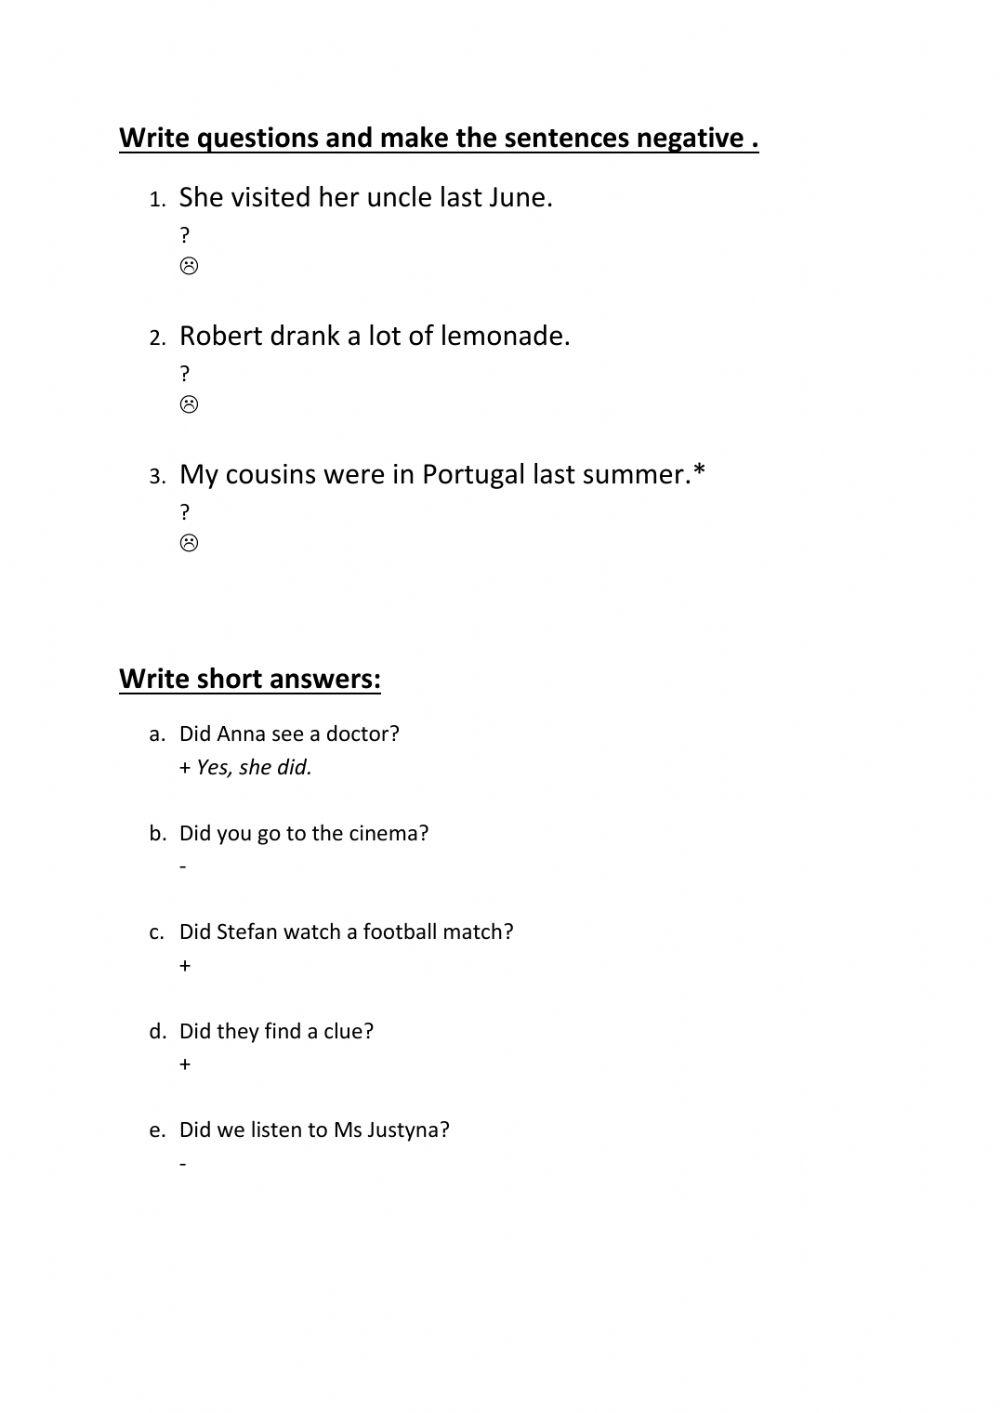 Past Simple questions and negative sentences.